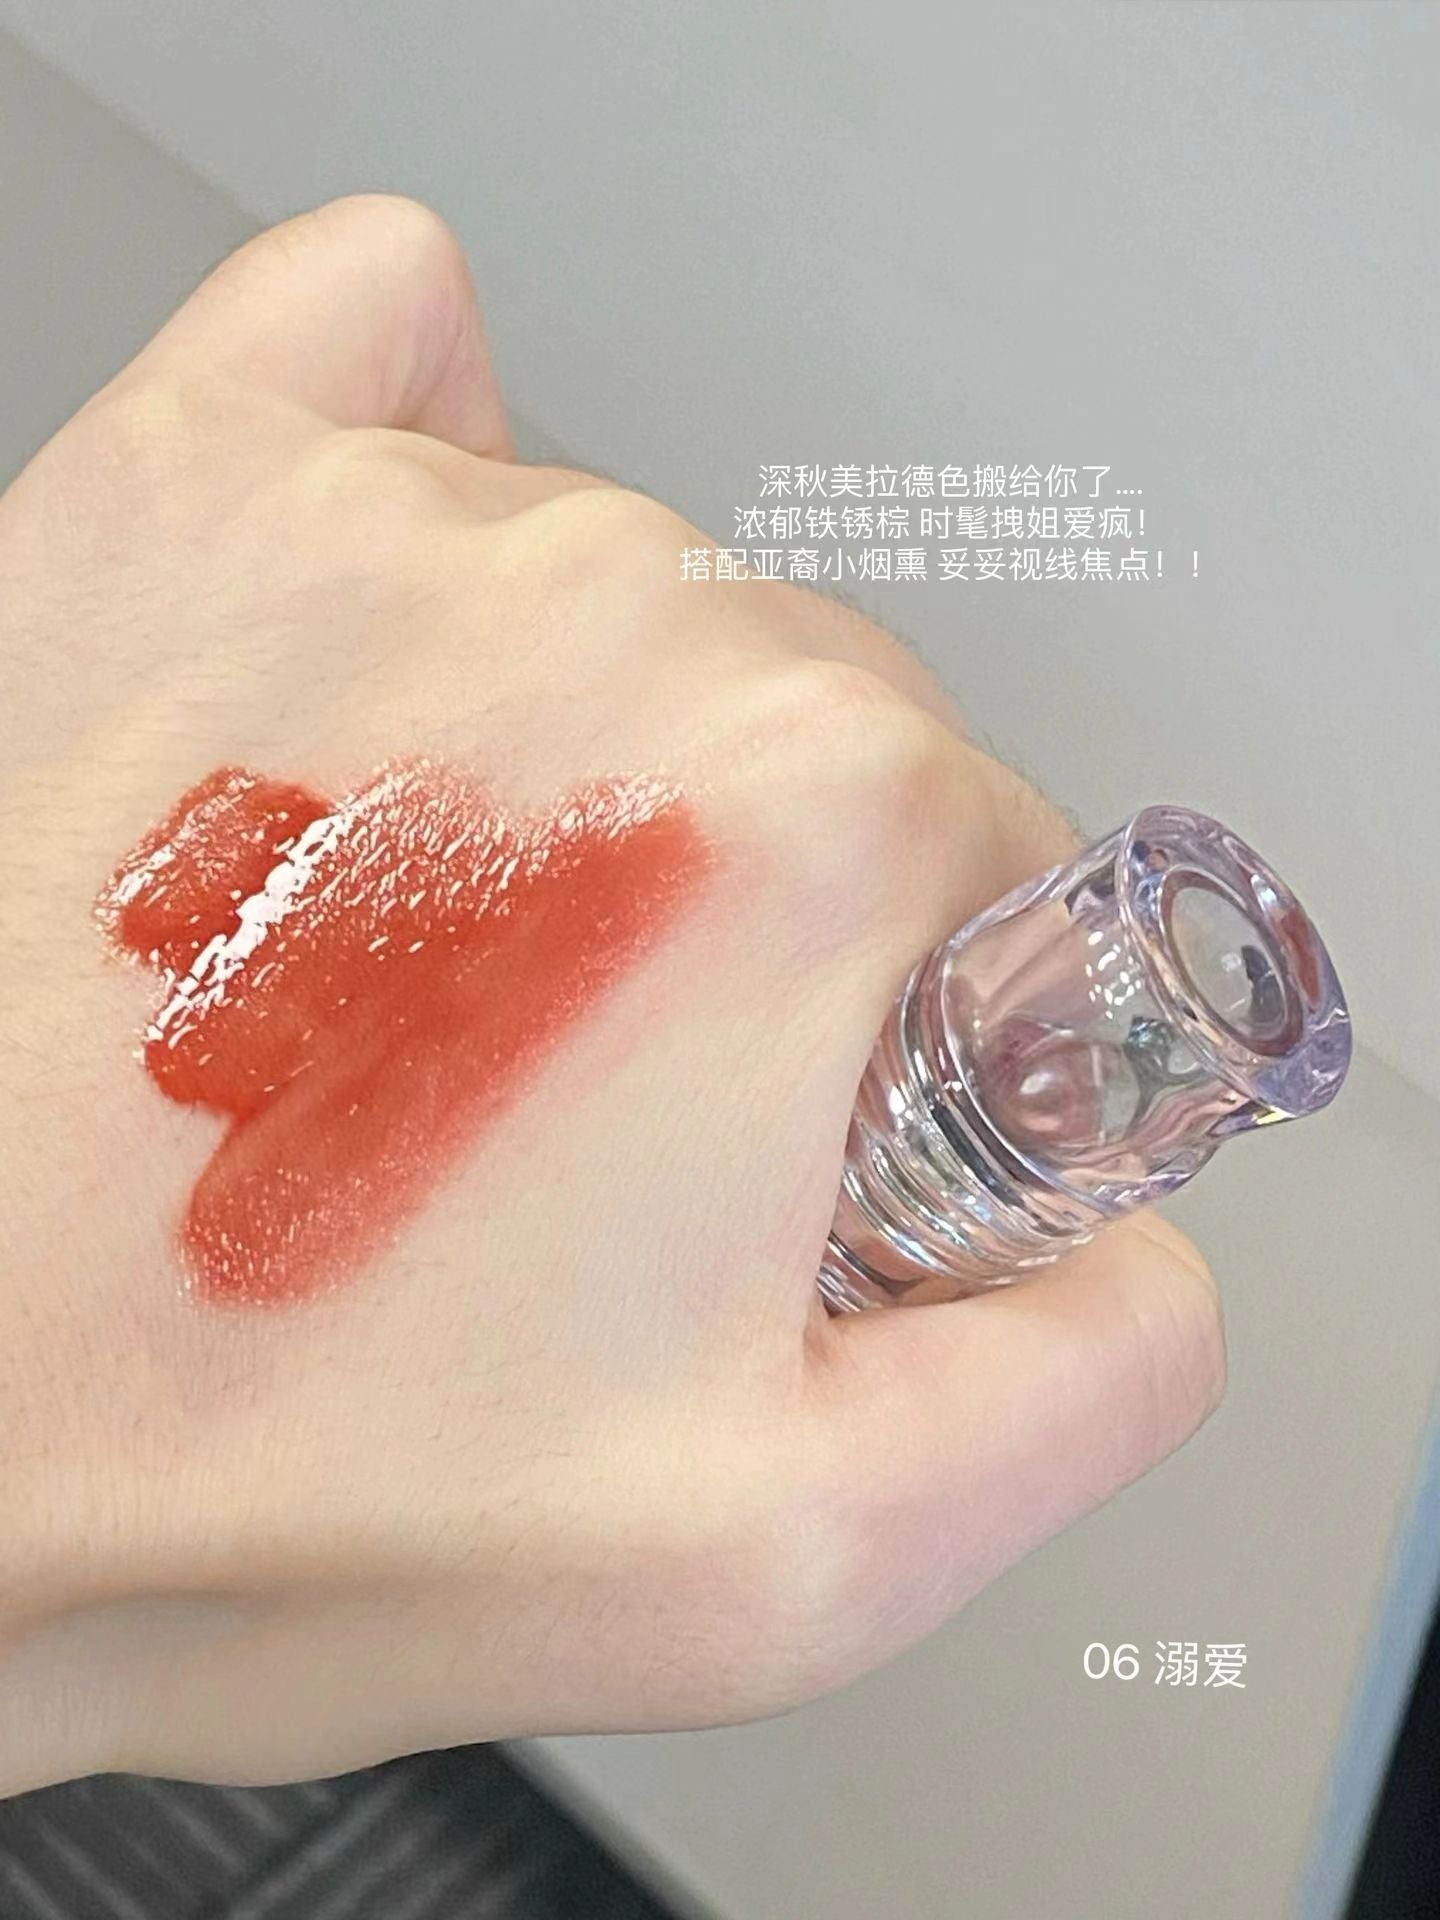 Flortte Mirror Shine Water Lip Lacquer Lip Gloss 2.6g 花洛莉亚好美莉亚镜面水光唇漆唇釉